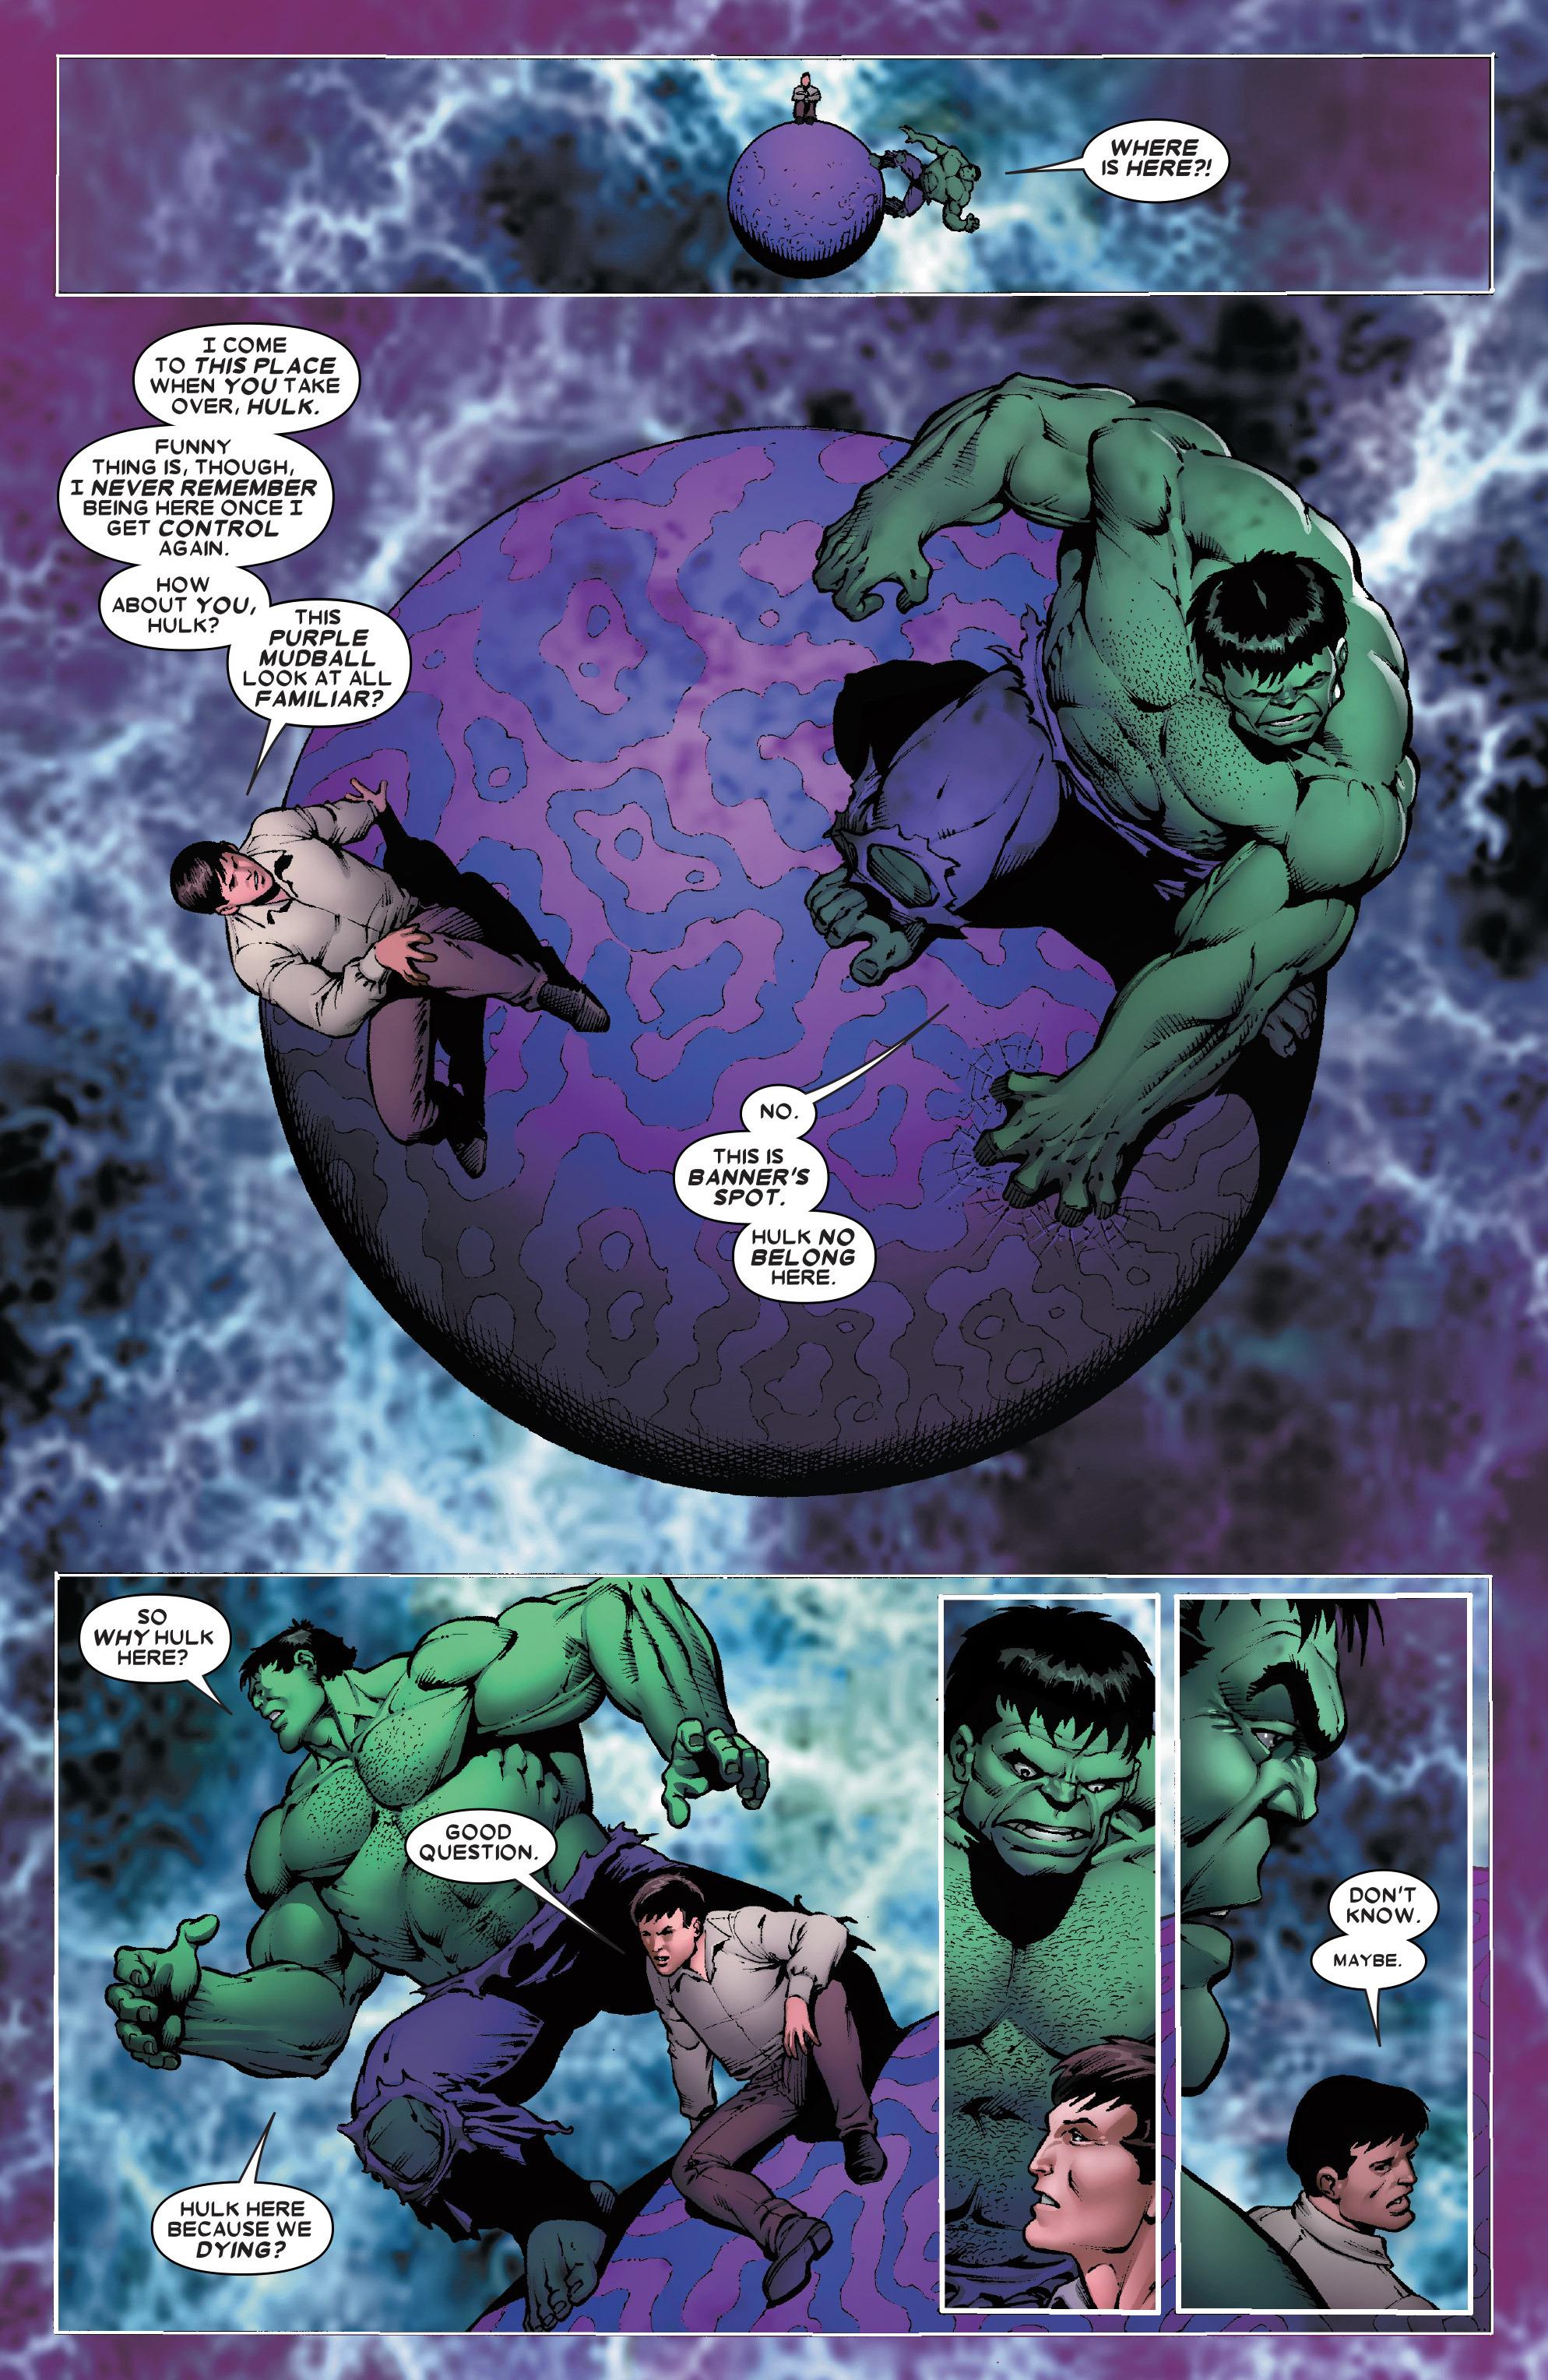 Thanos Vs Hulk review